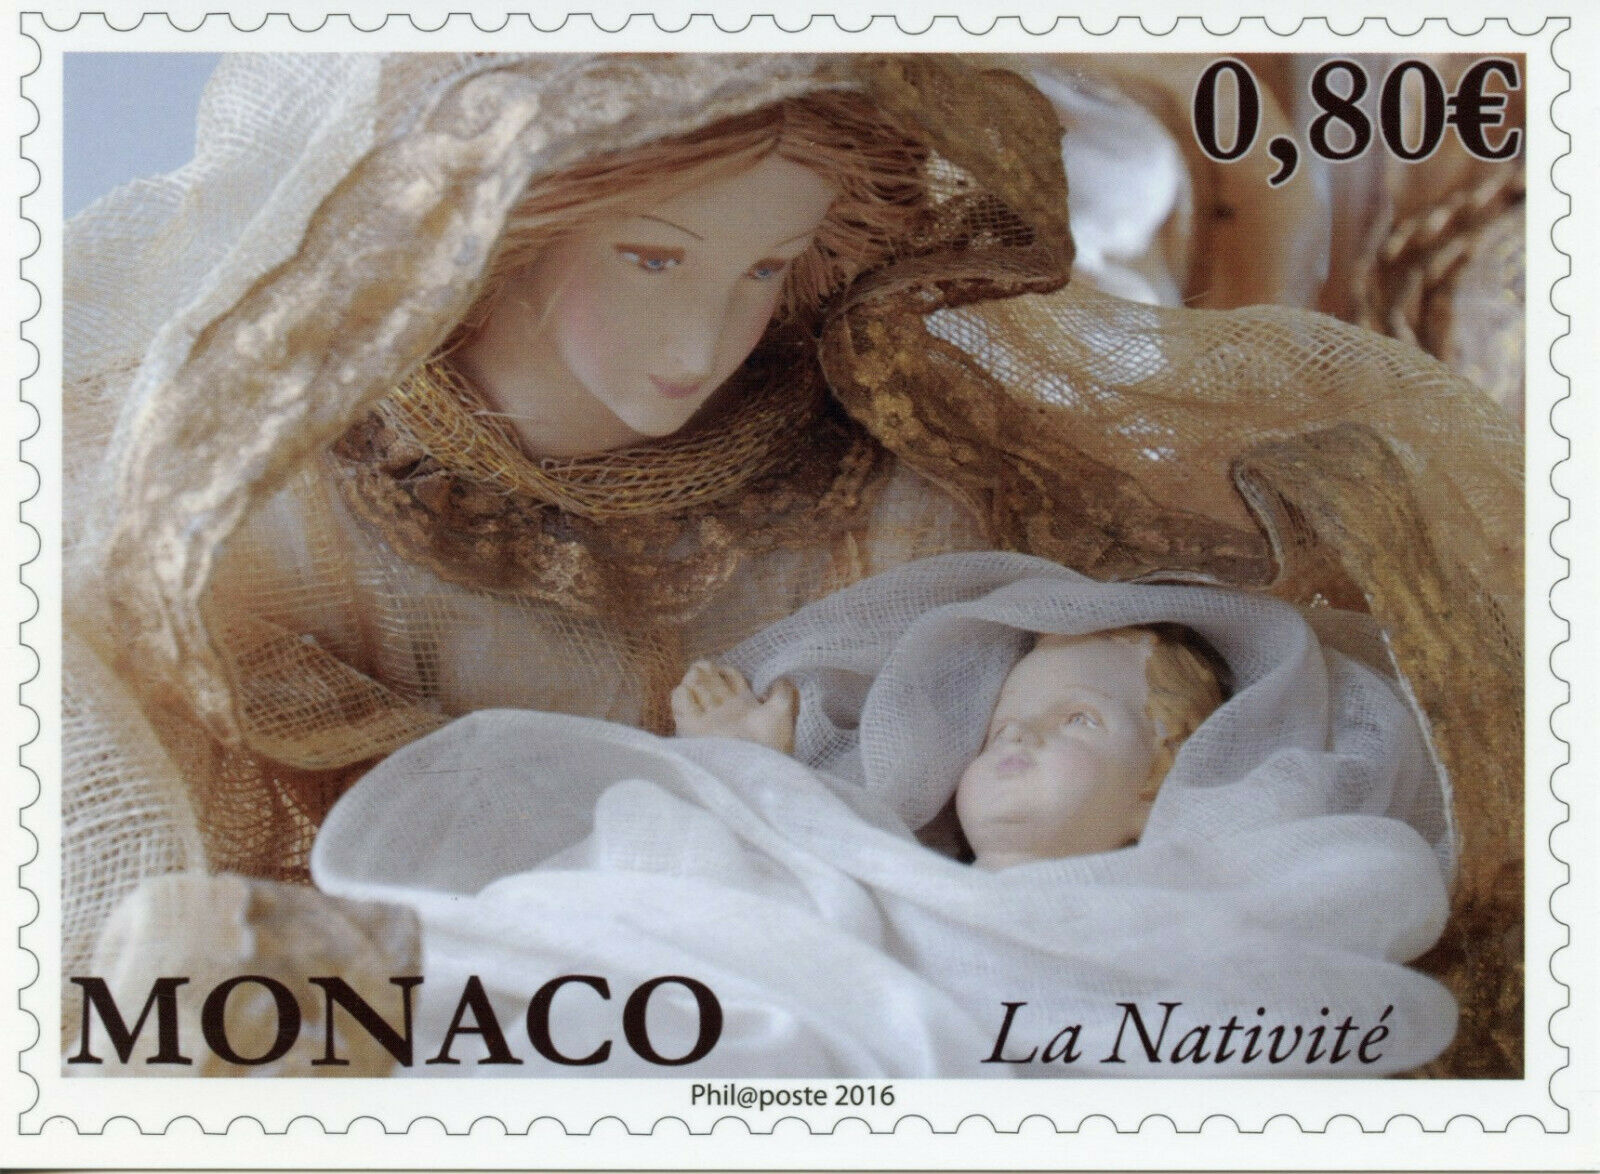 Monaco Christmas Stamps on Postcard 2016 Nativity 1v Set